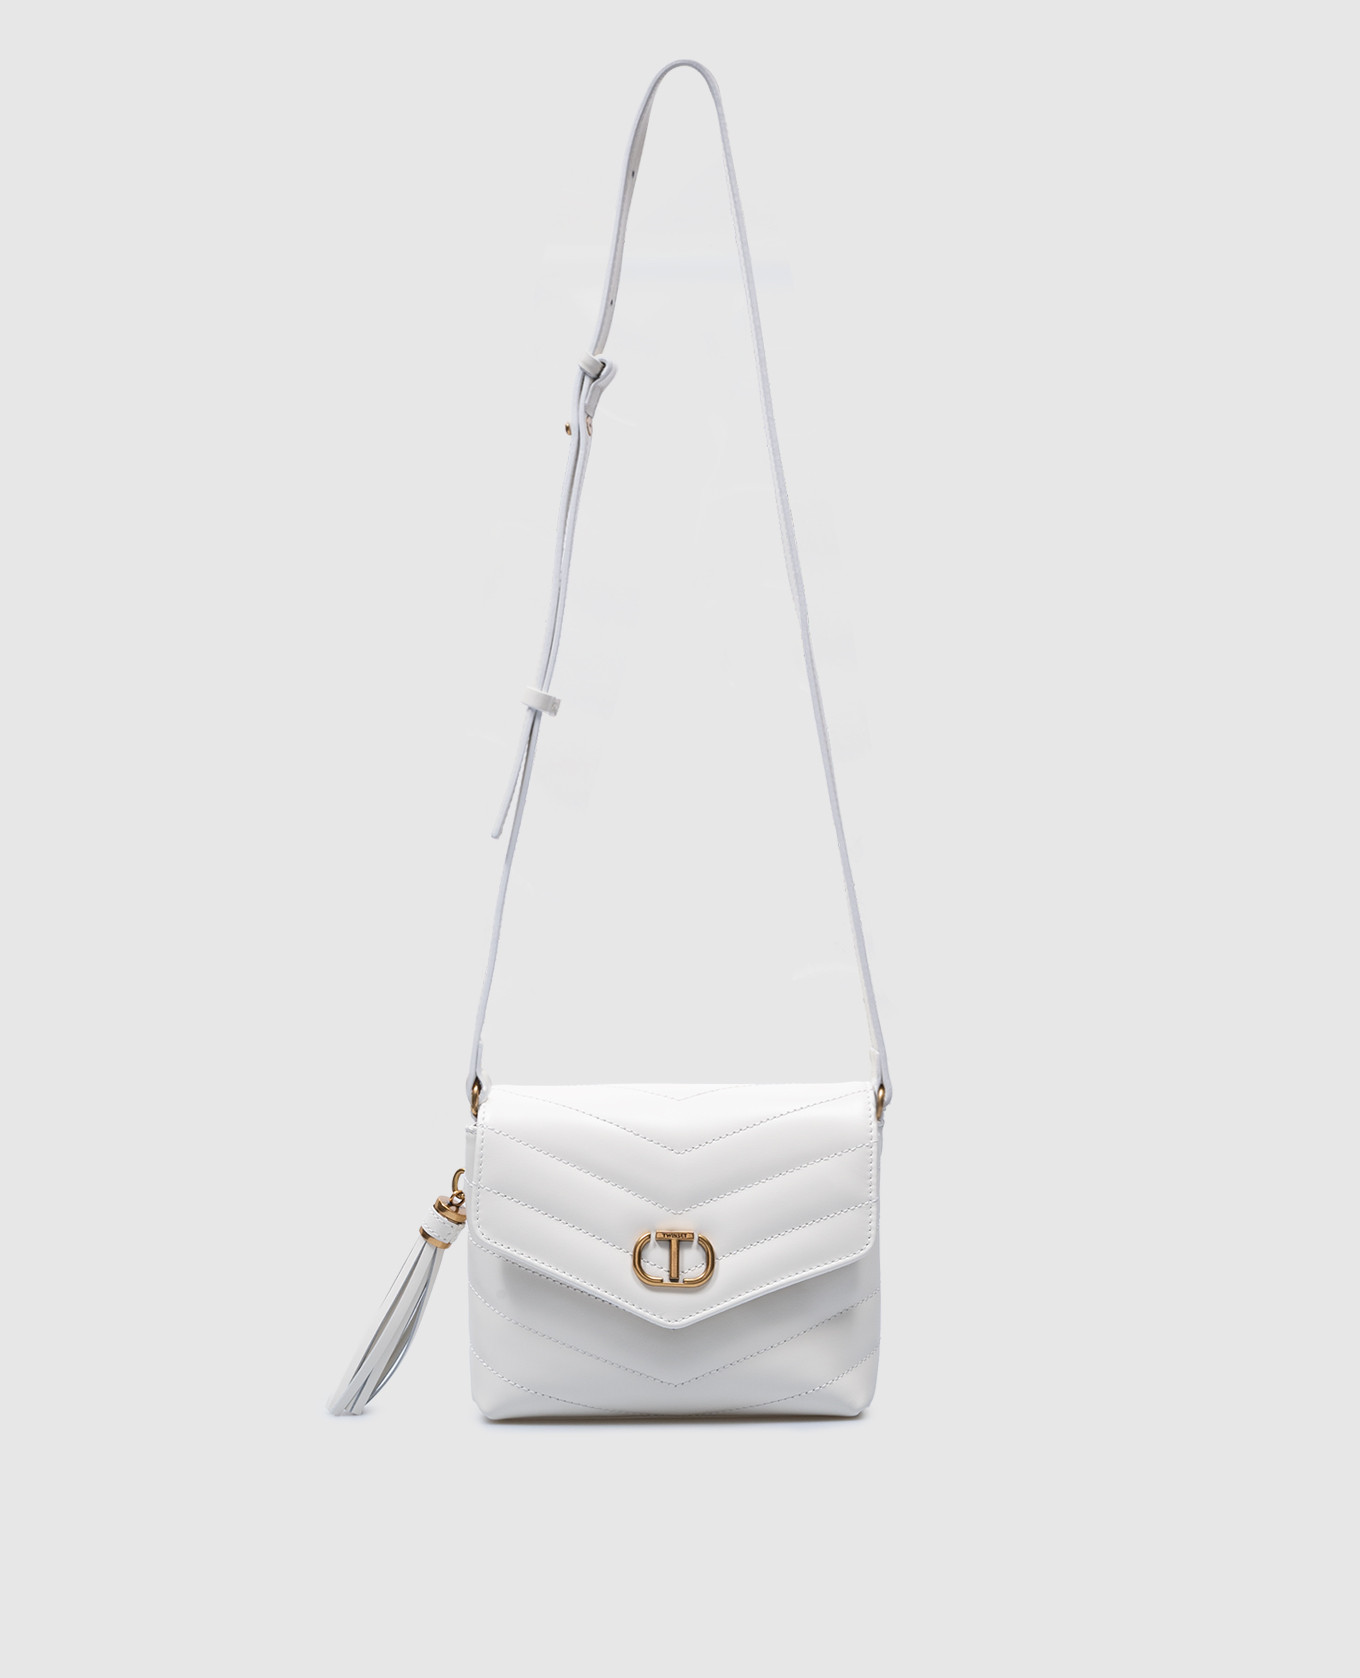 White bag with logo padding